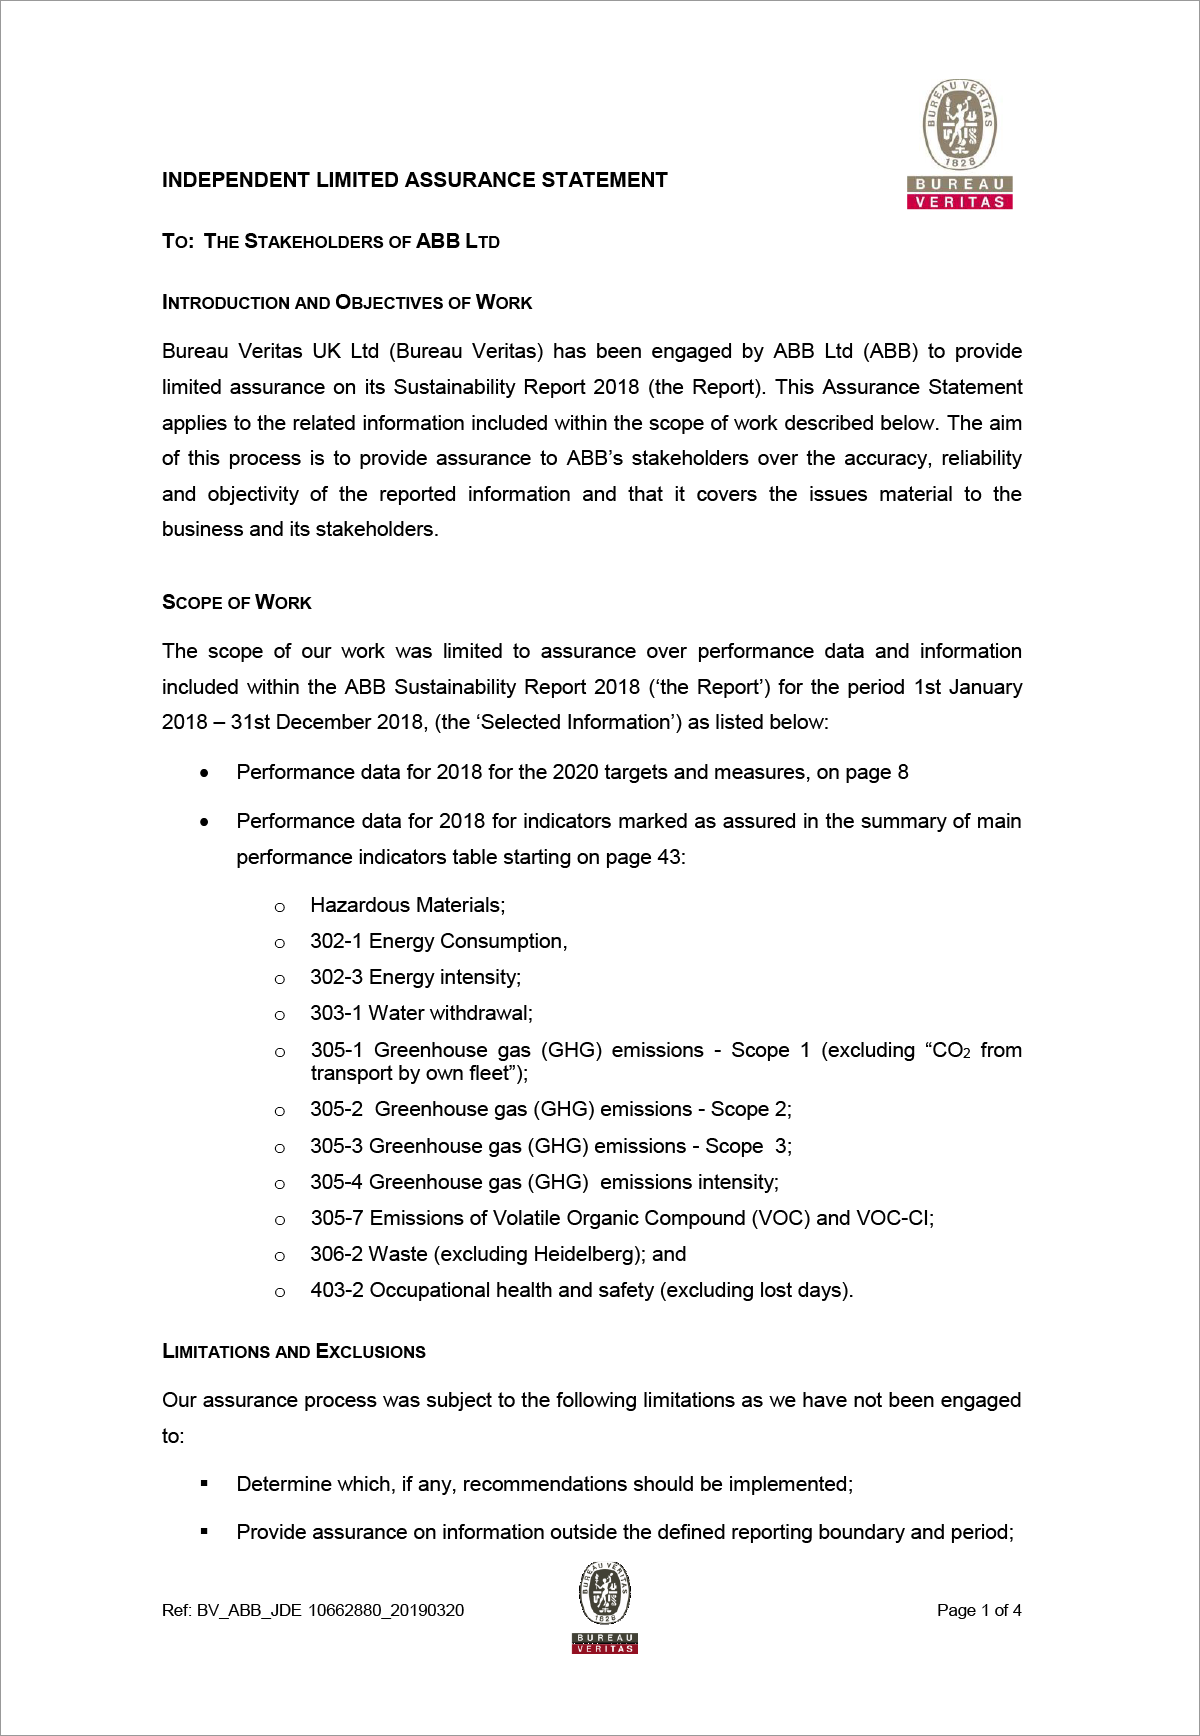 Bureau Veritas assurance statement – page 1 of 4 (document)